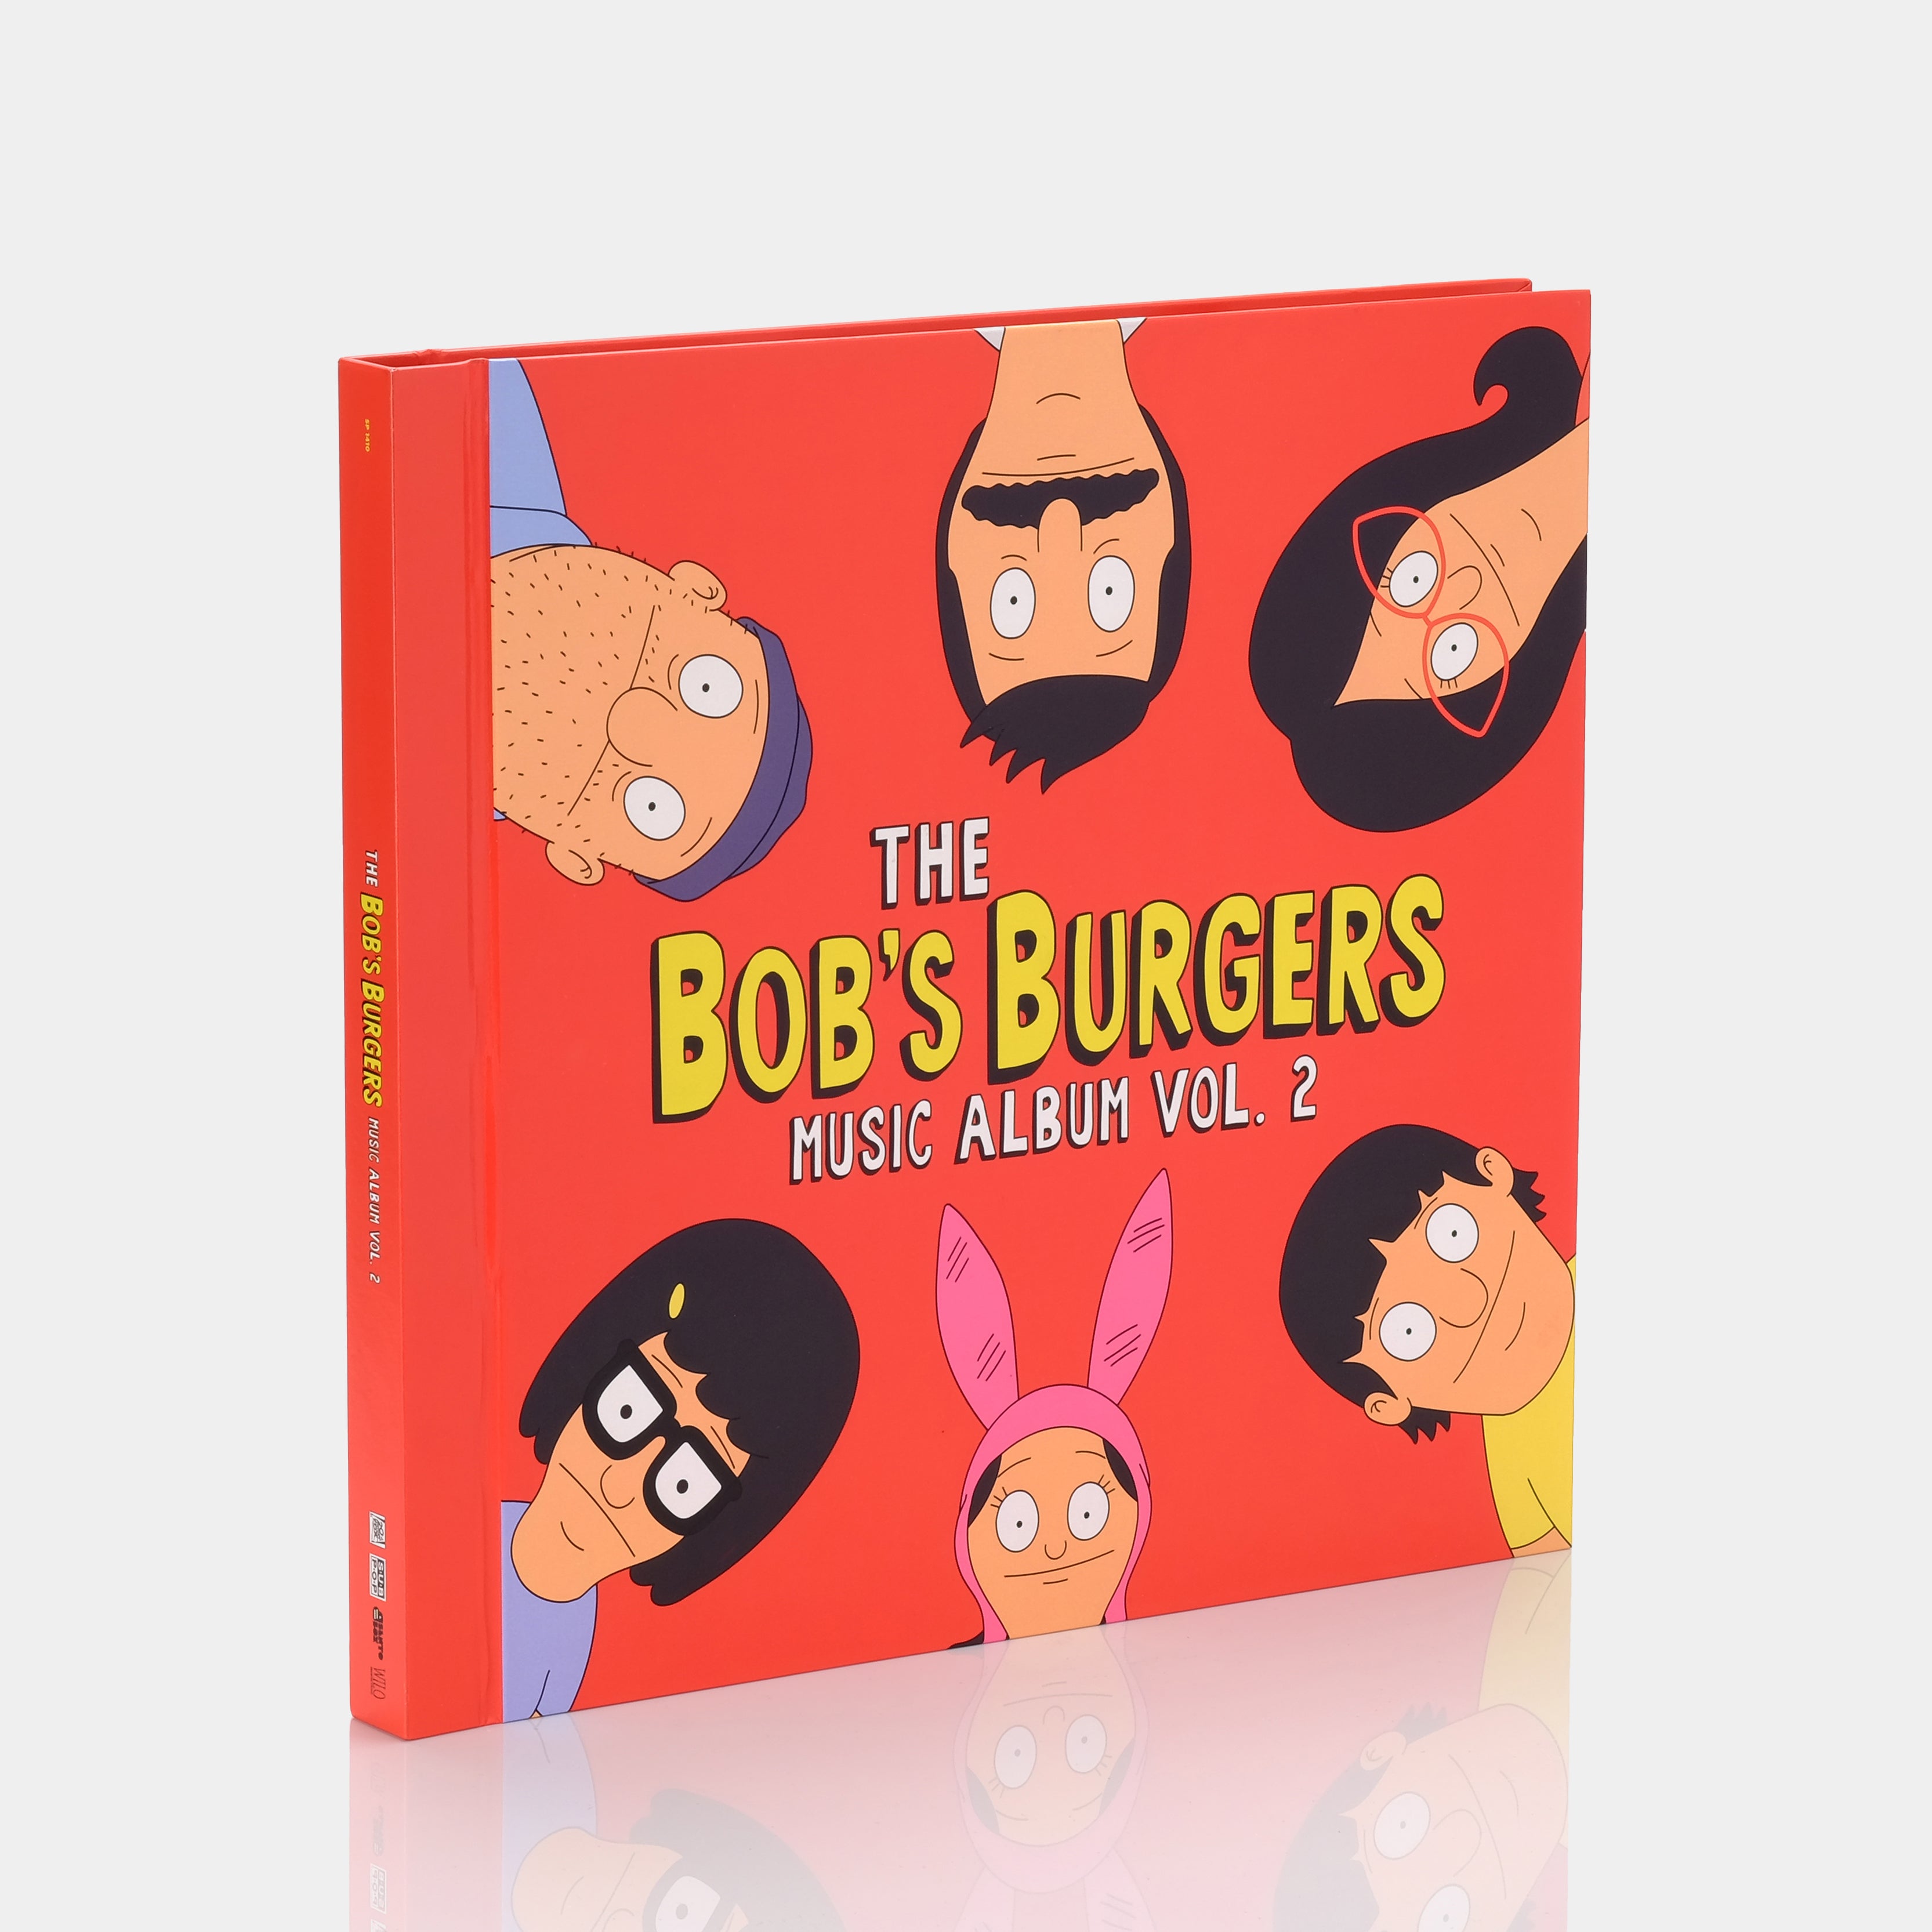 Bob's Burgers - The Bob's Burgers Music Album (Vol. 2) 3xLP Multicolored Vinyl Record Deluxe Box Set